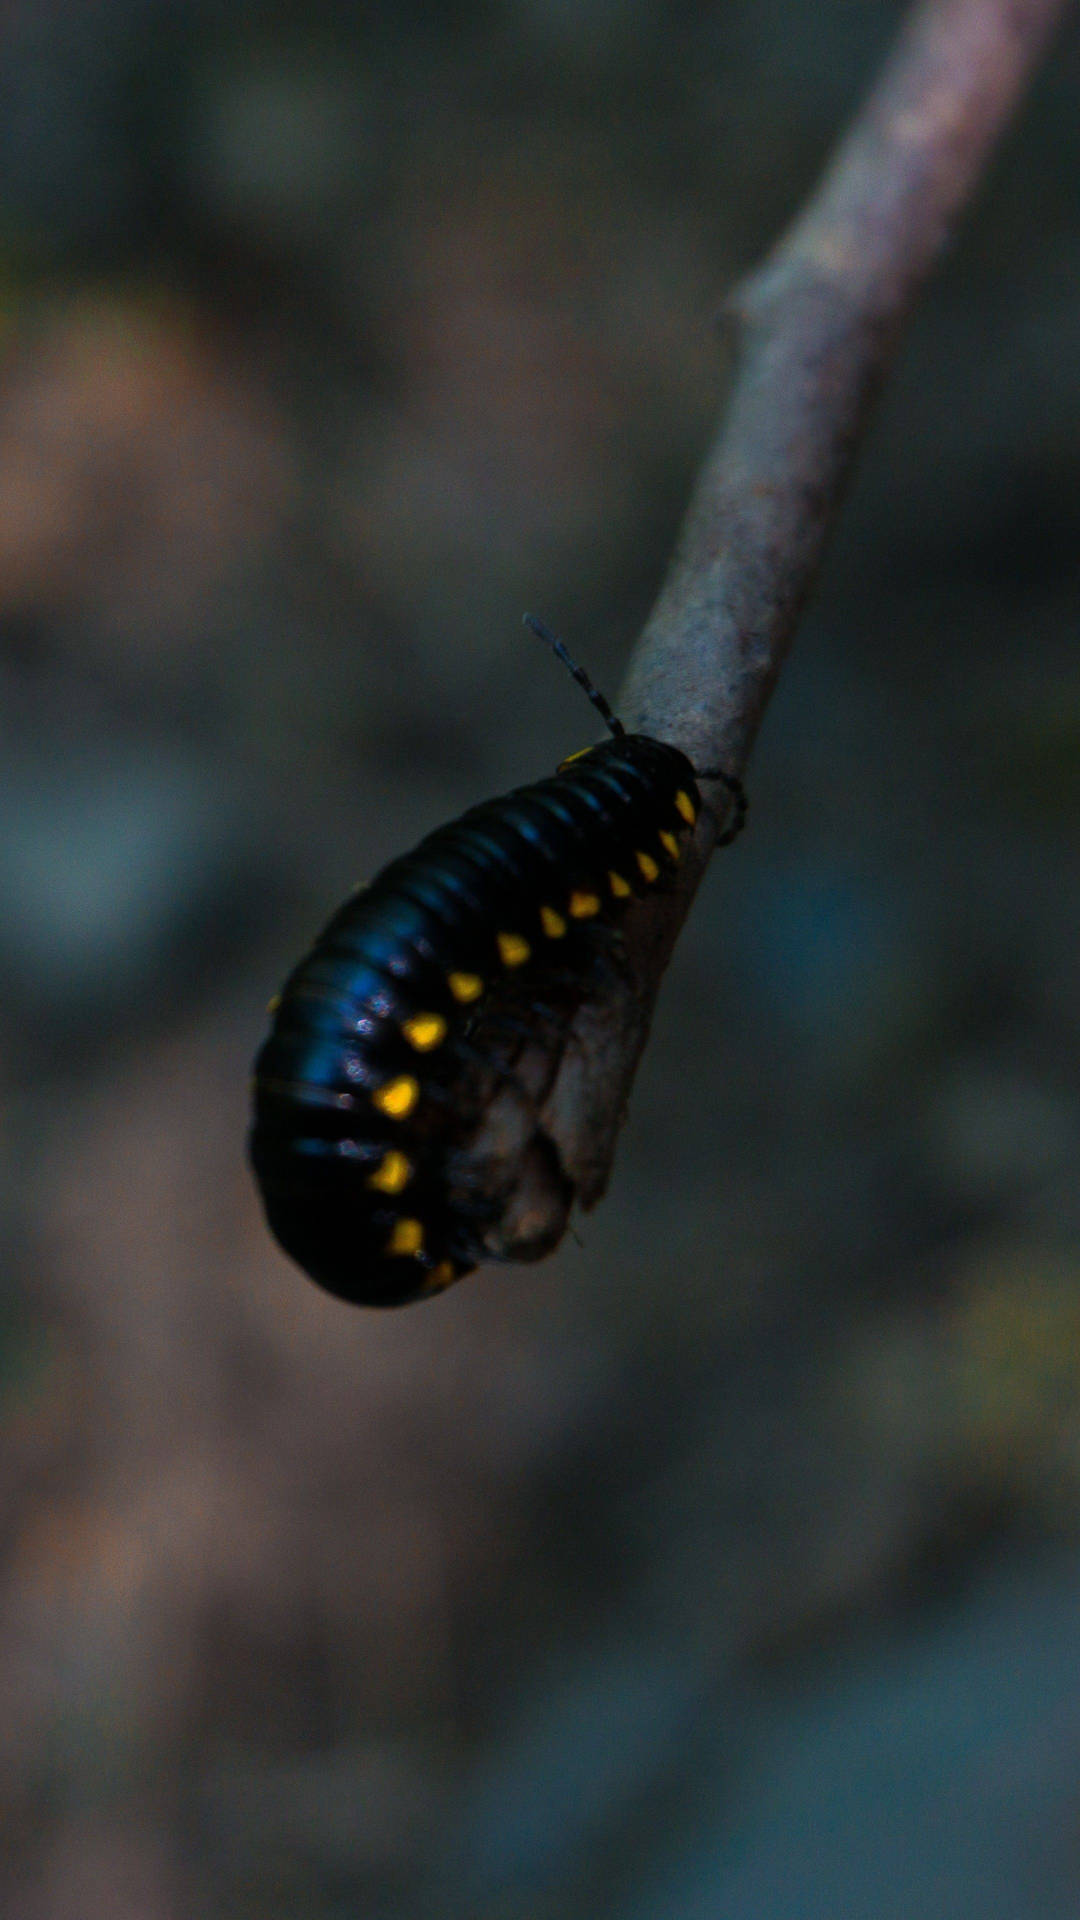 Black Caterpillar With Yellow Spots